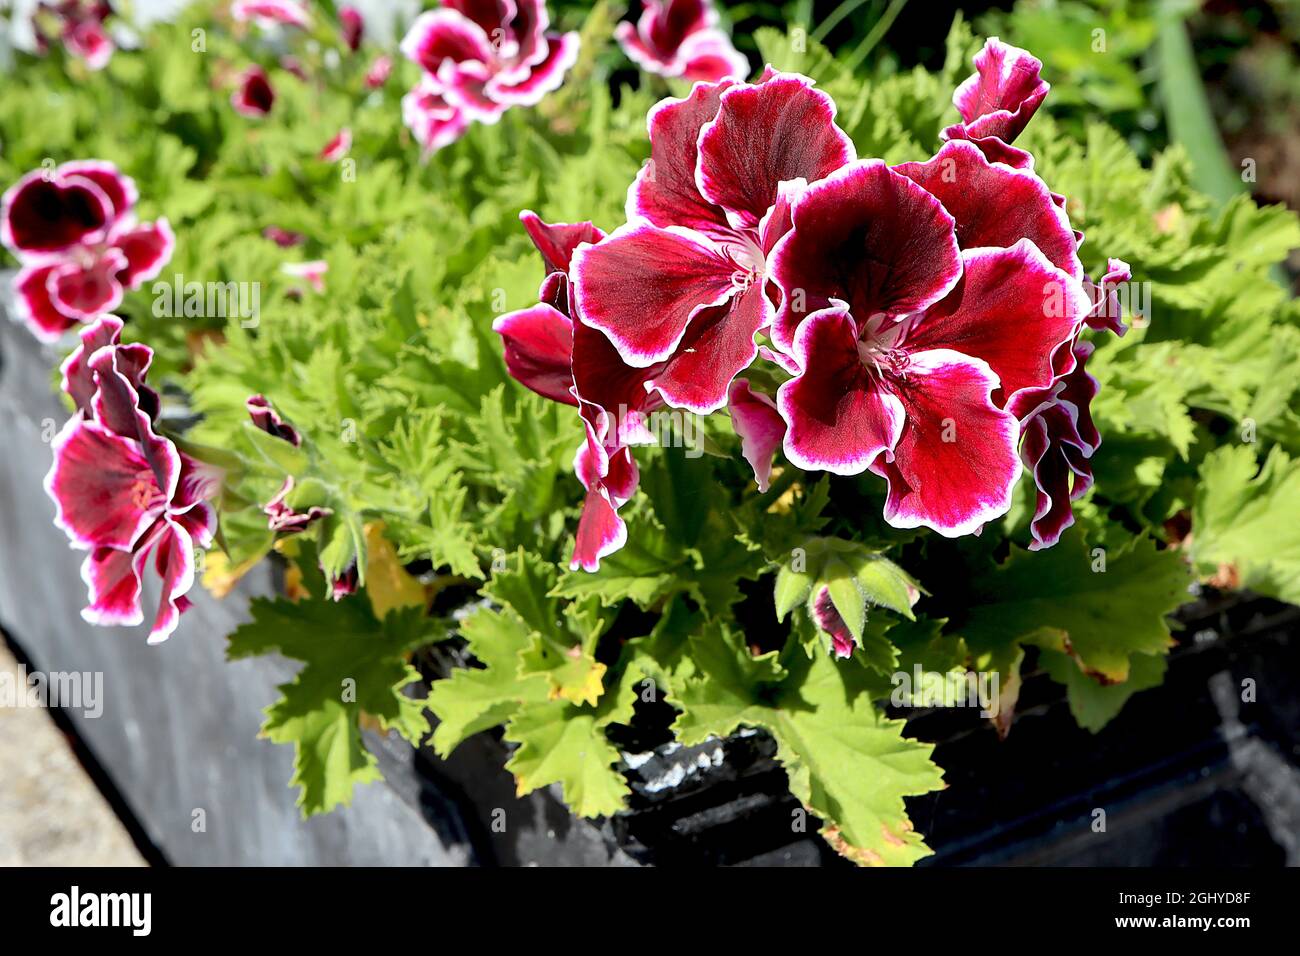 Pelargonium x grandiflorum ‘Aristo Black Beauty’ Pelargonium Black Beauty – burgundy red flowers with fine white margins and palmately lobed leaves Stock Photo